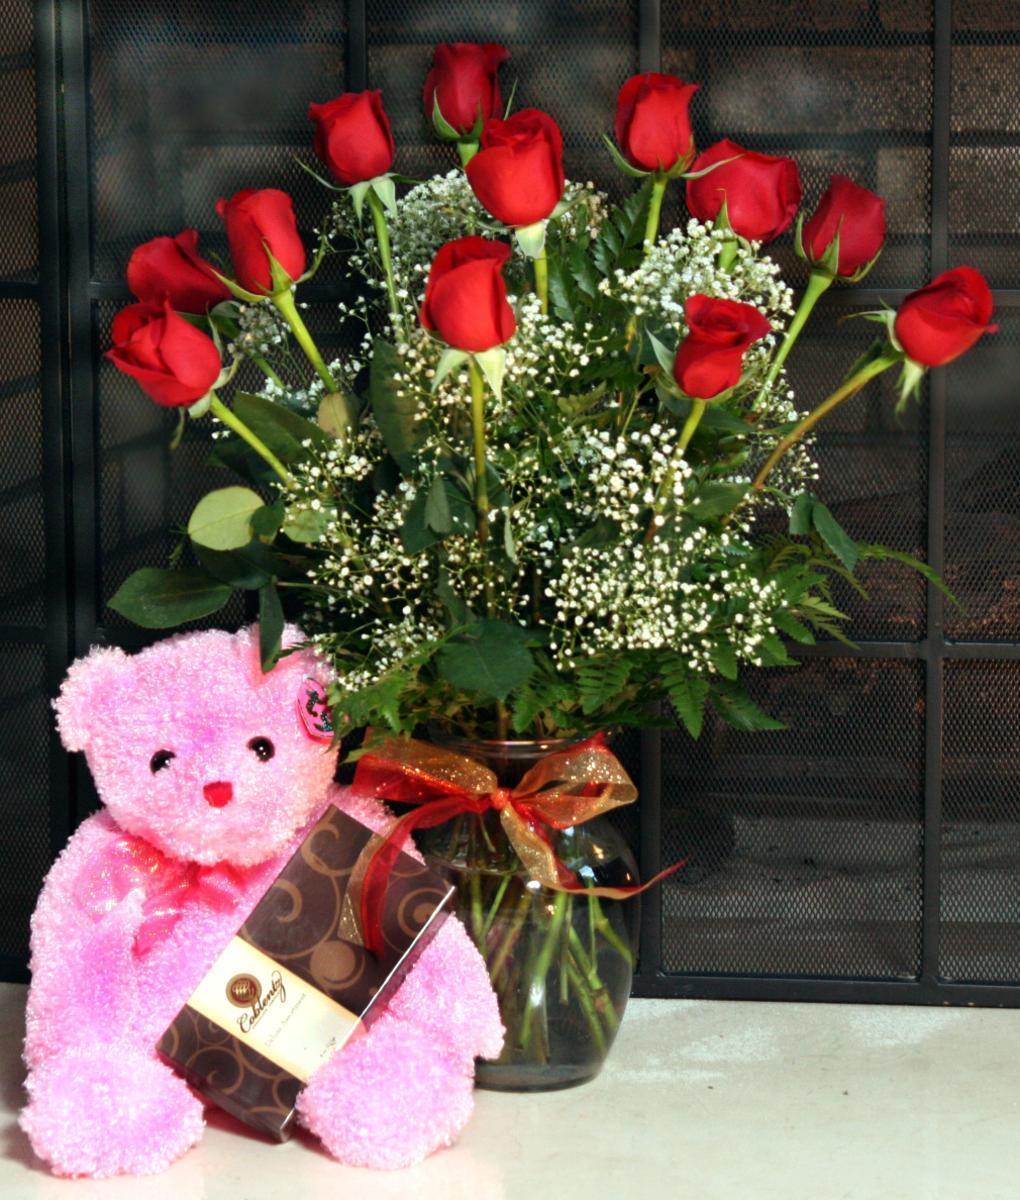 San Valentins day gift red roses free desktop background